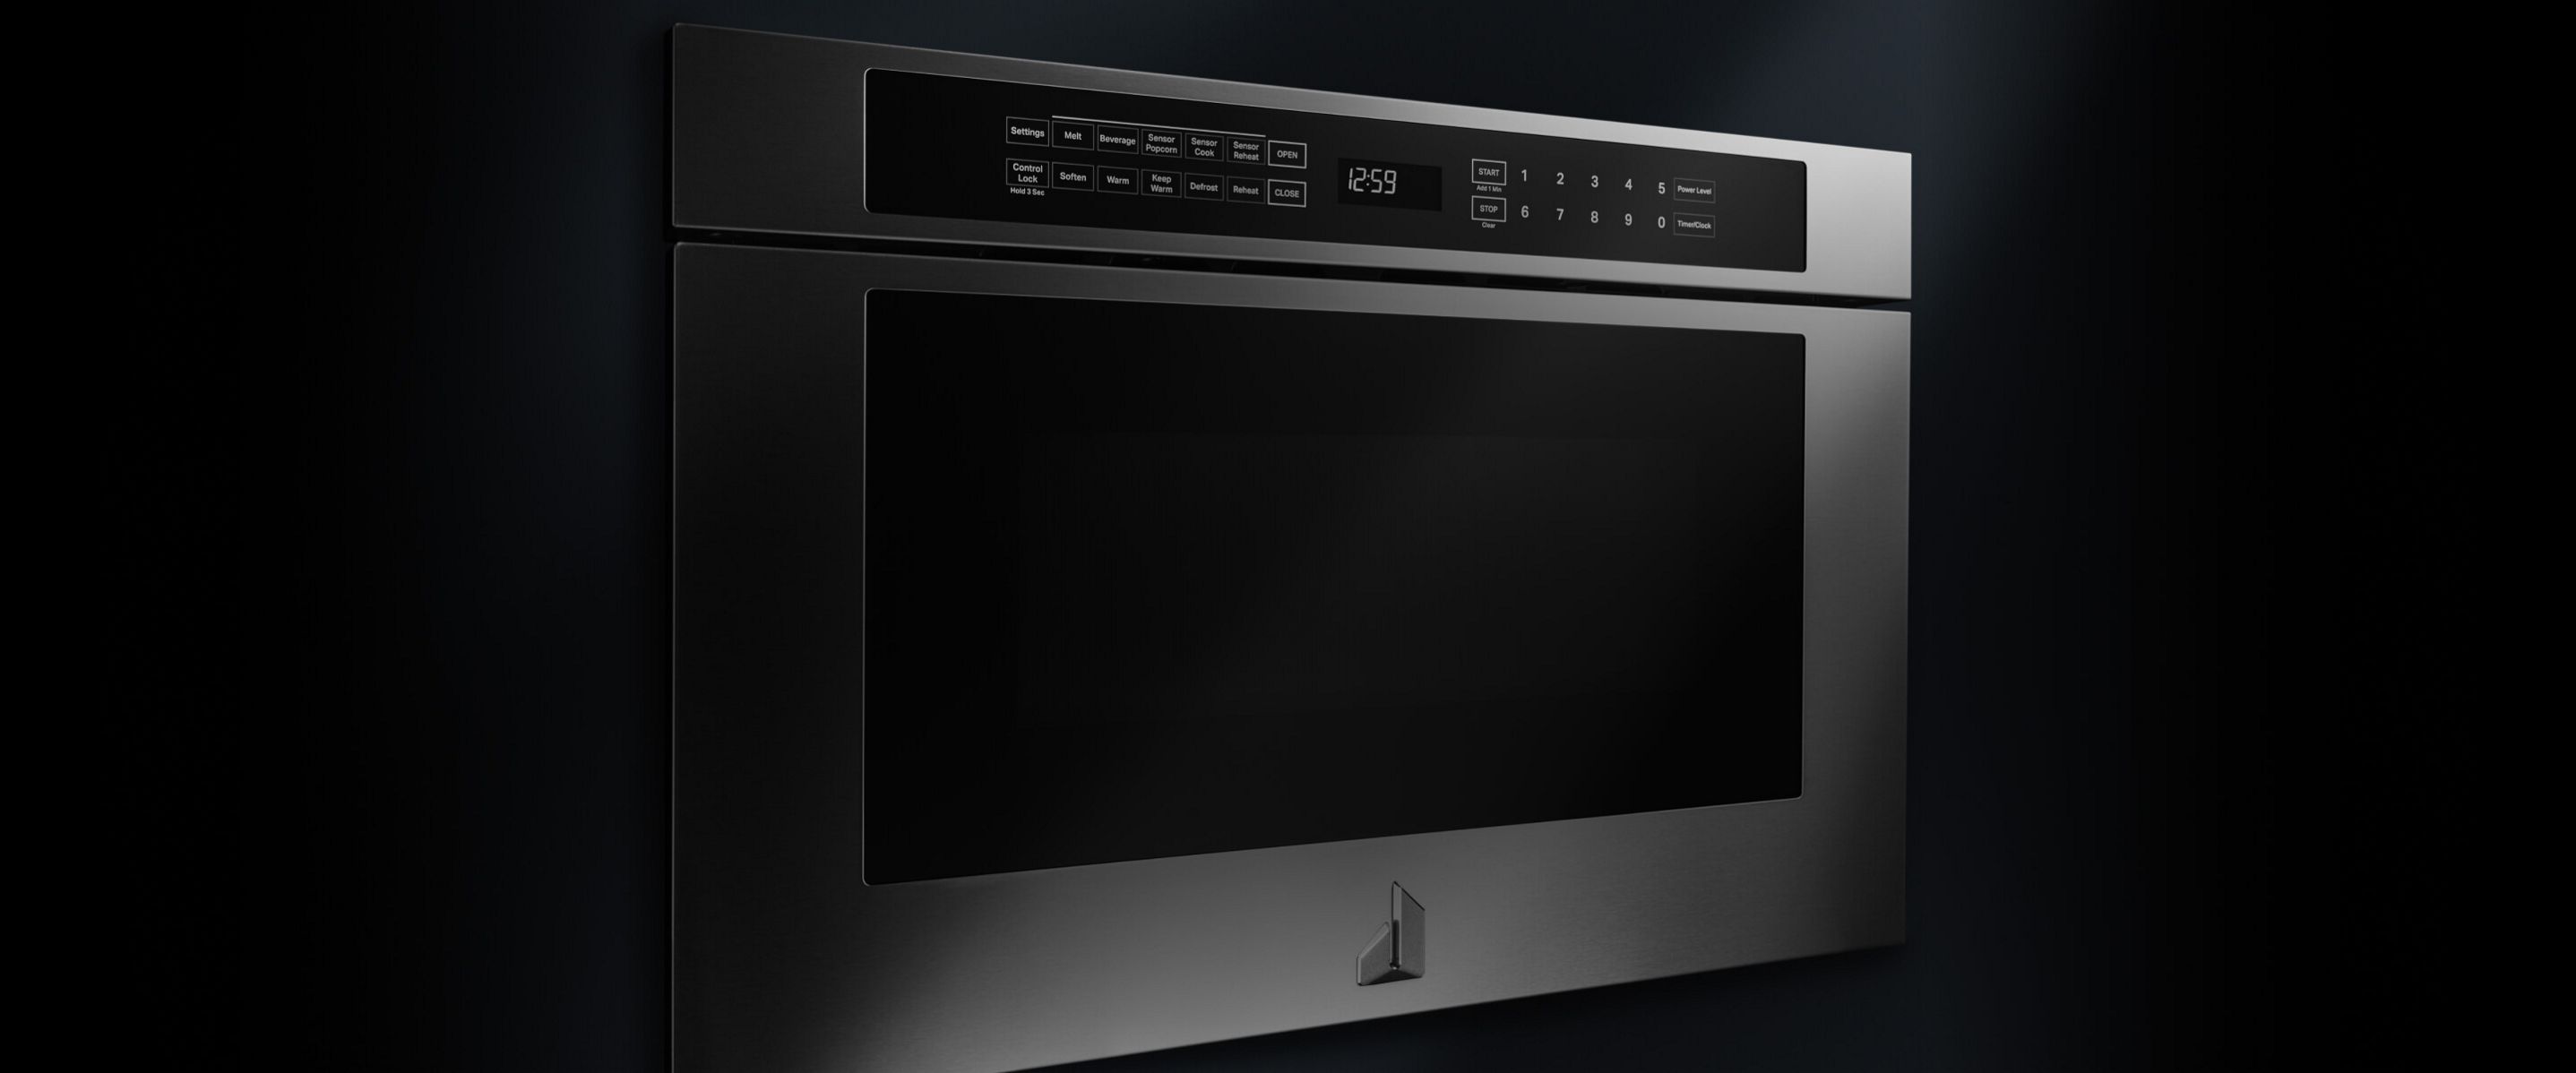 Buy KitchenAid 24 Countertop Microwave Oven - 1200 Watt